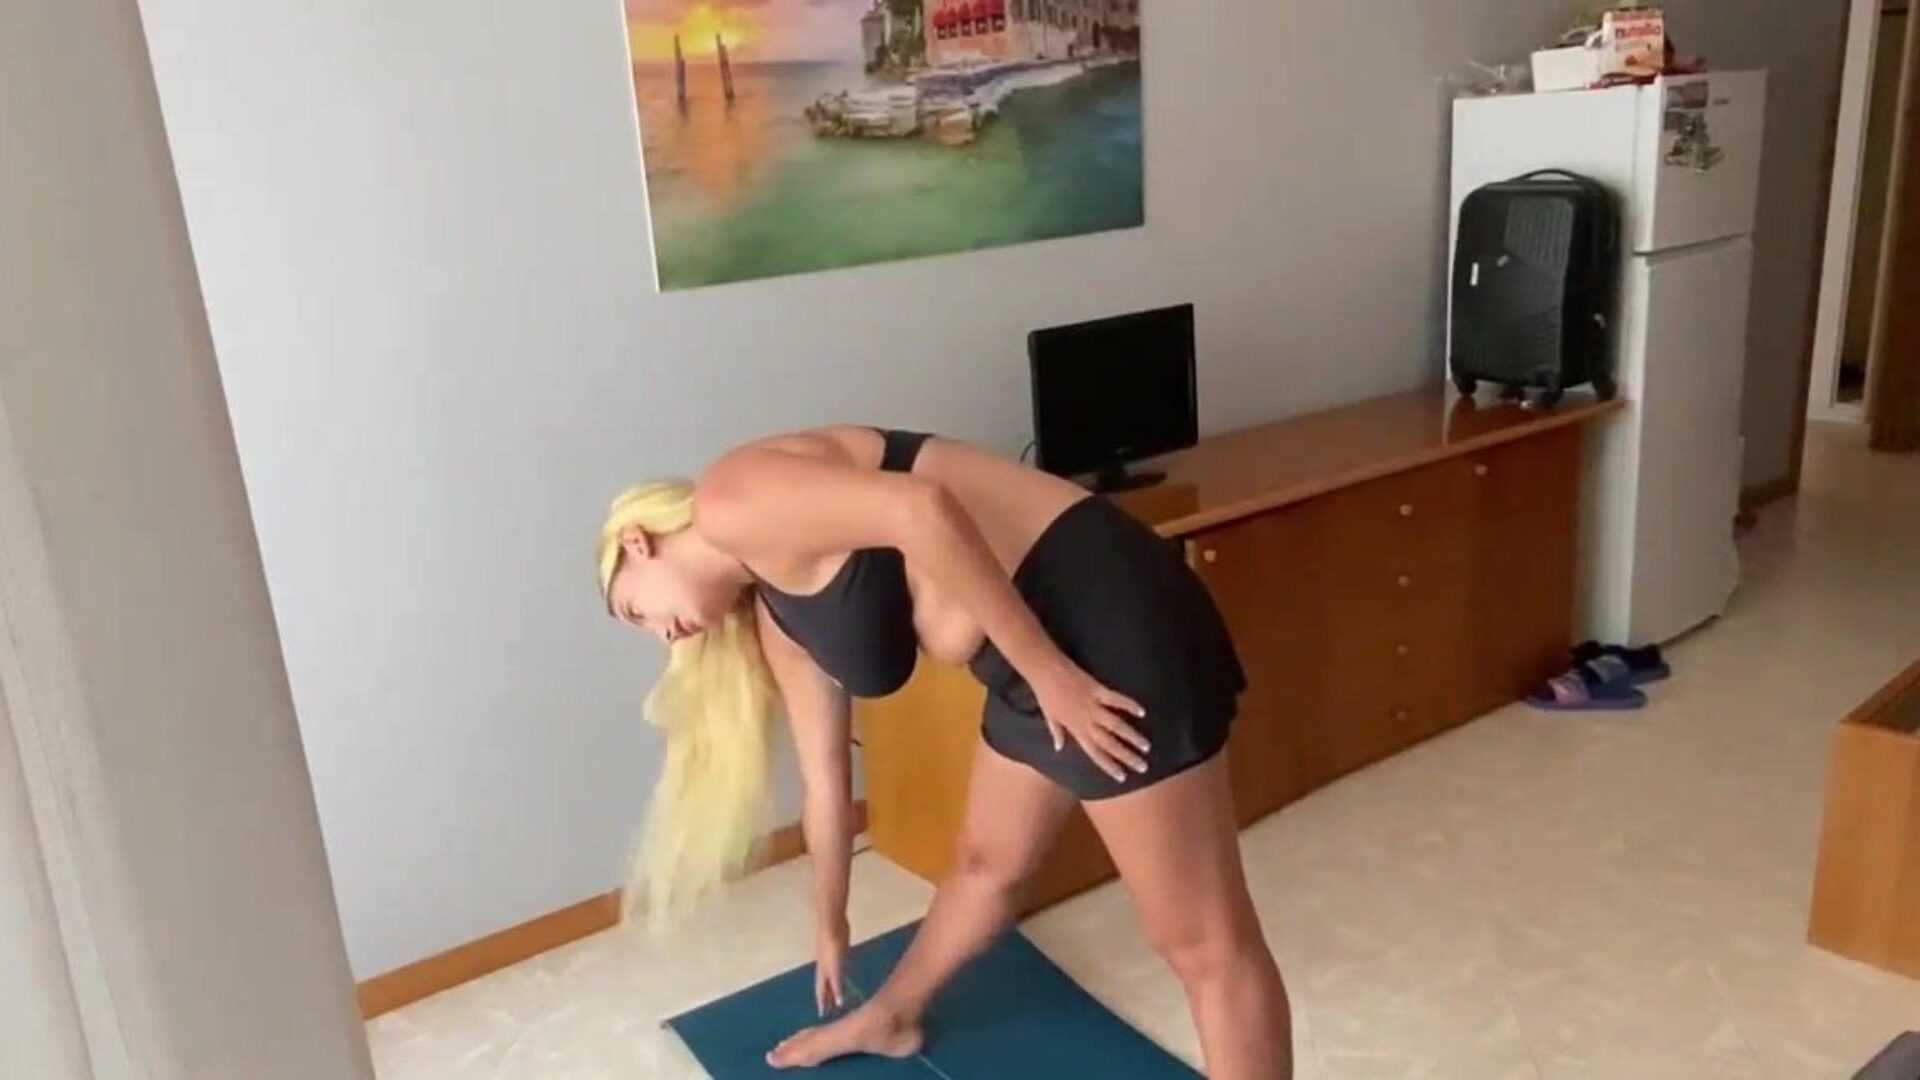 Personal yoga coach bonks hot cougar in class